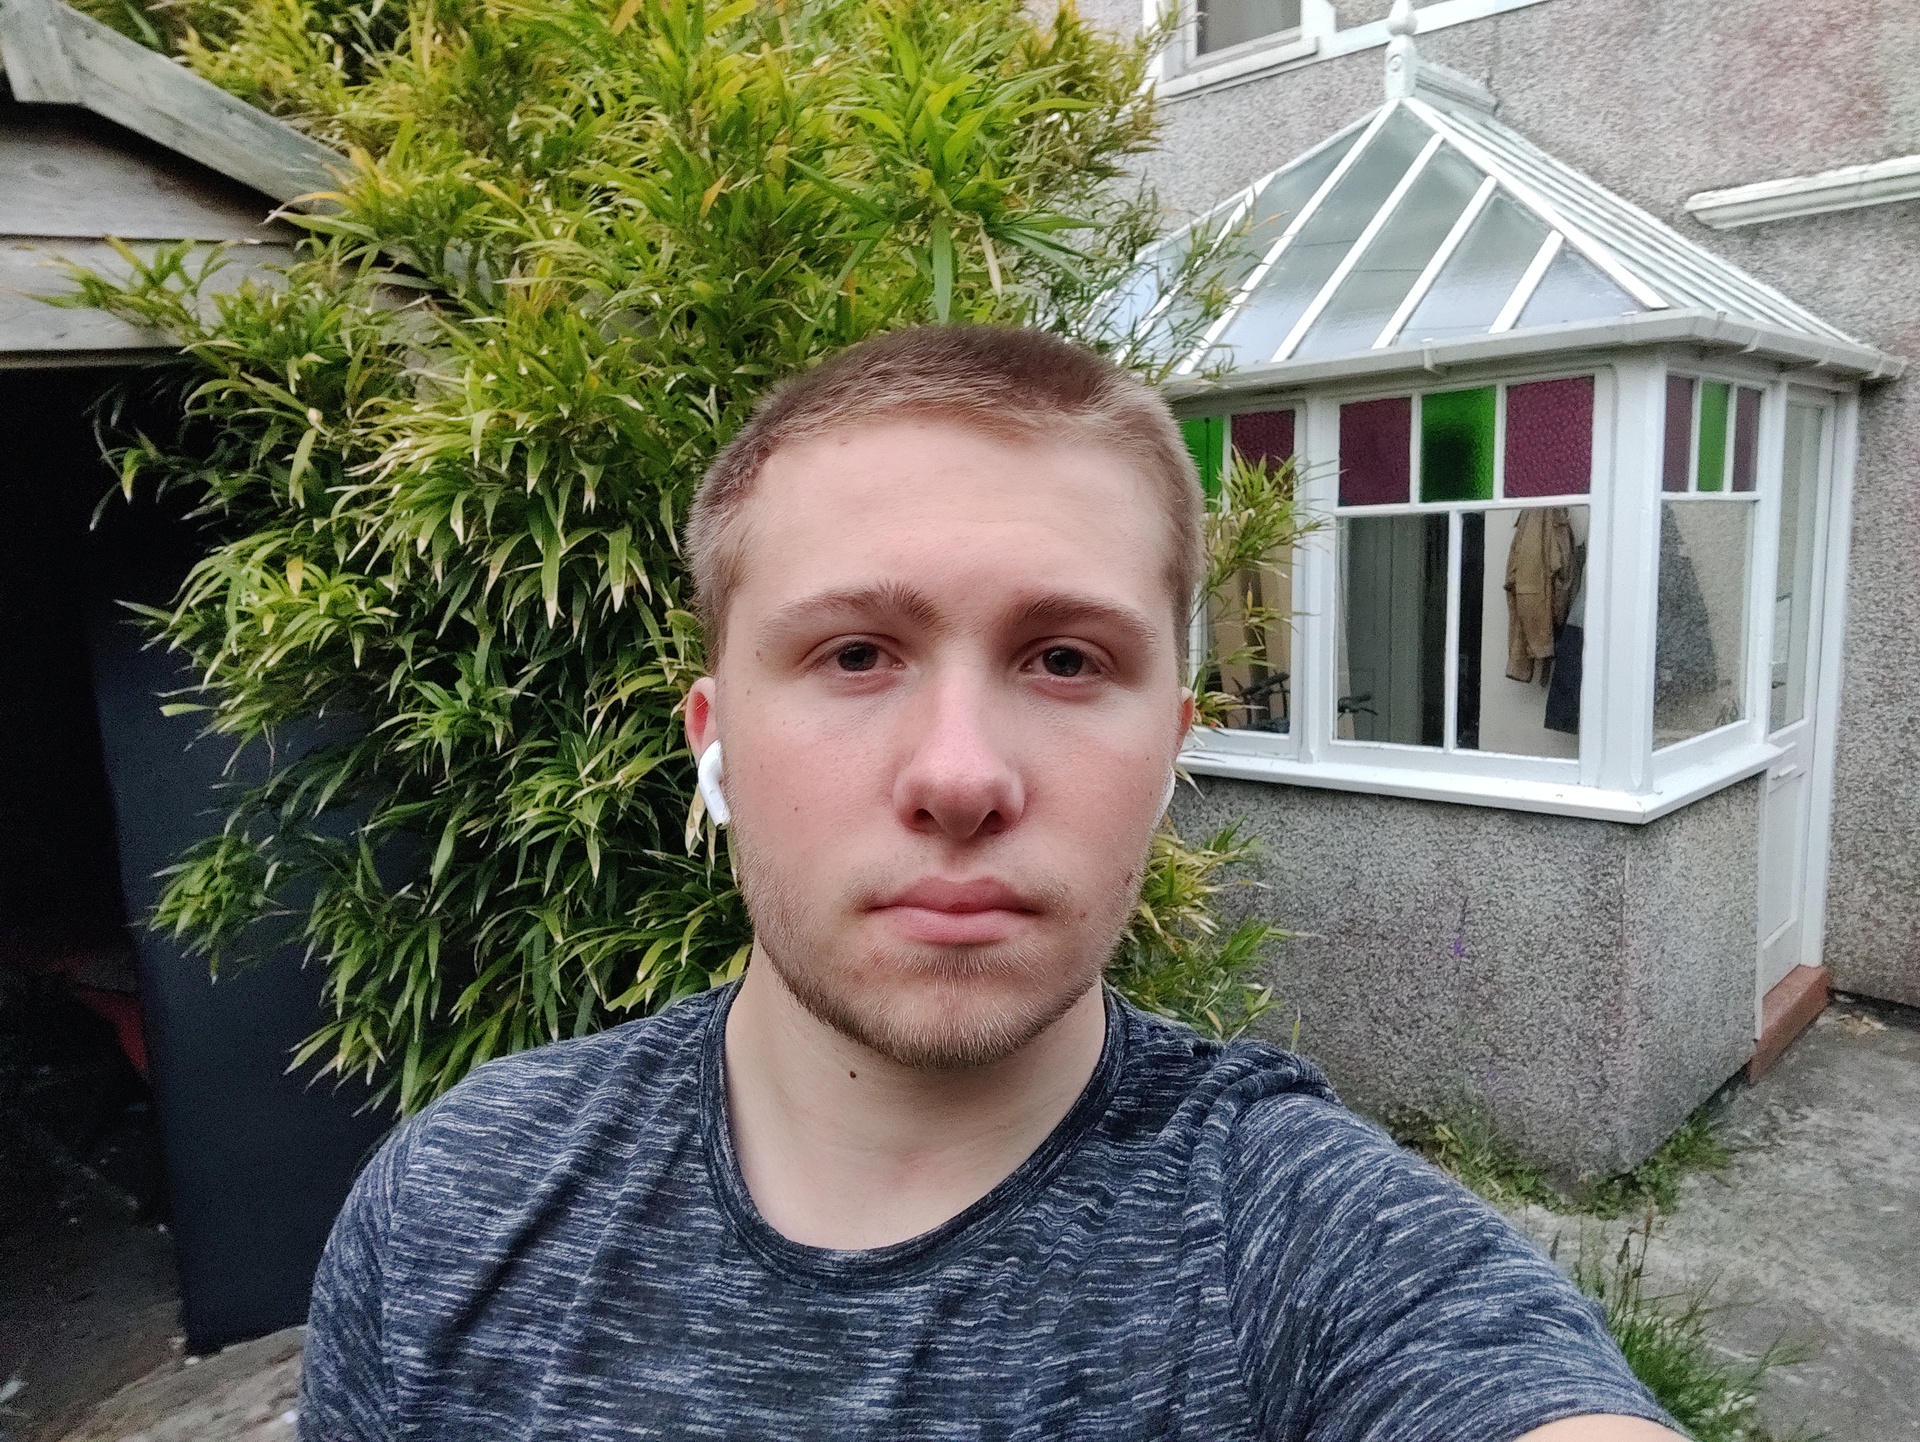 OnePlus Nord portrait mode selfie in garden